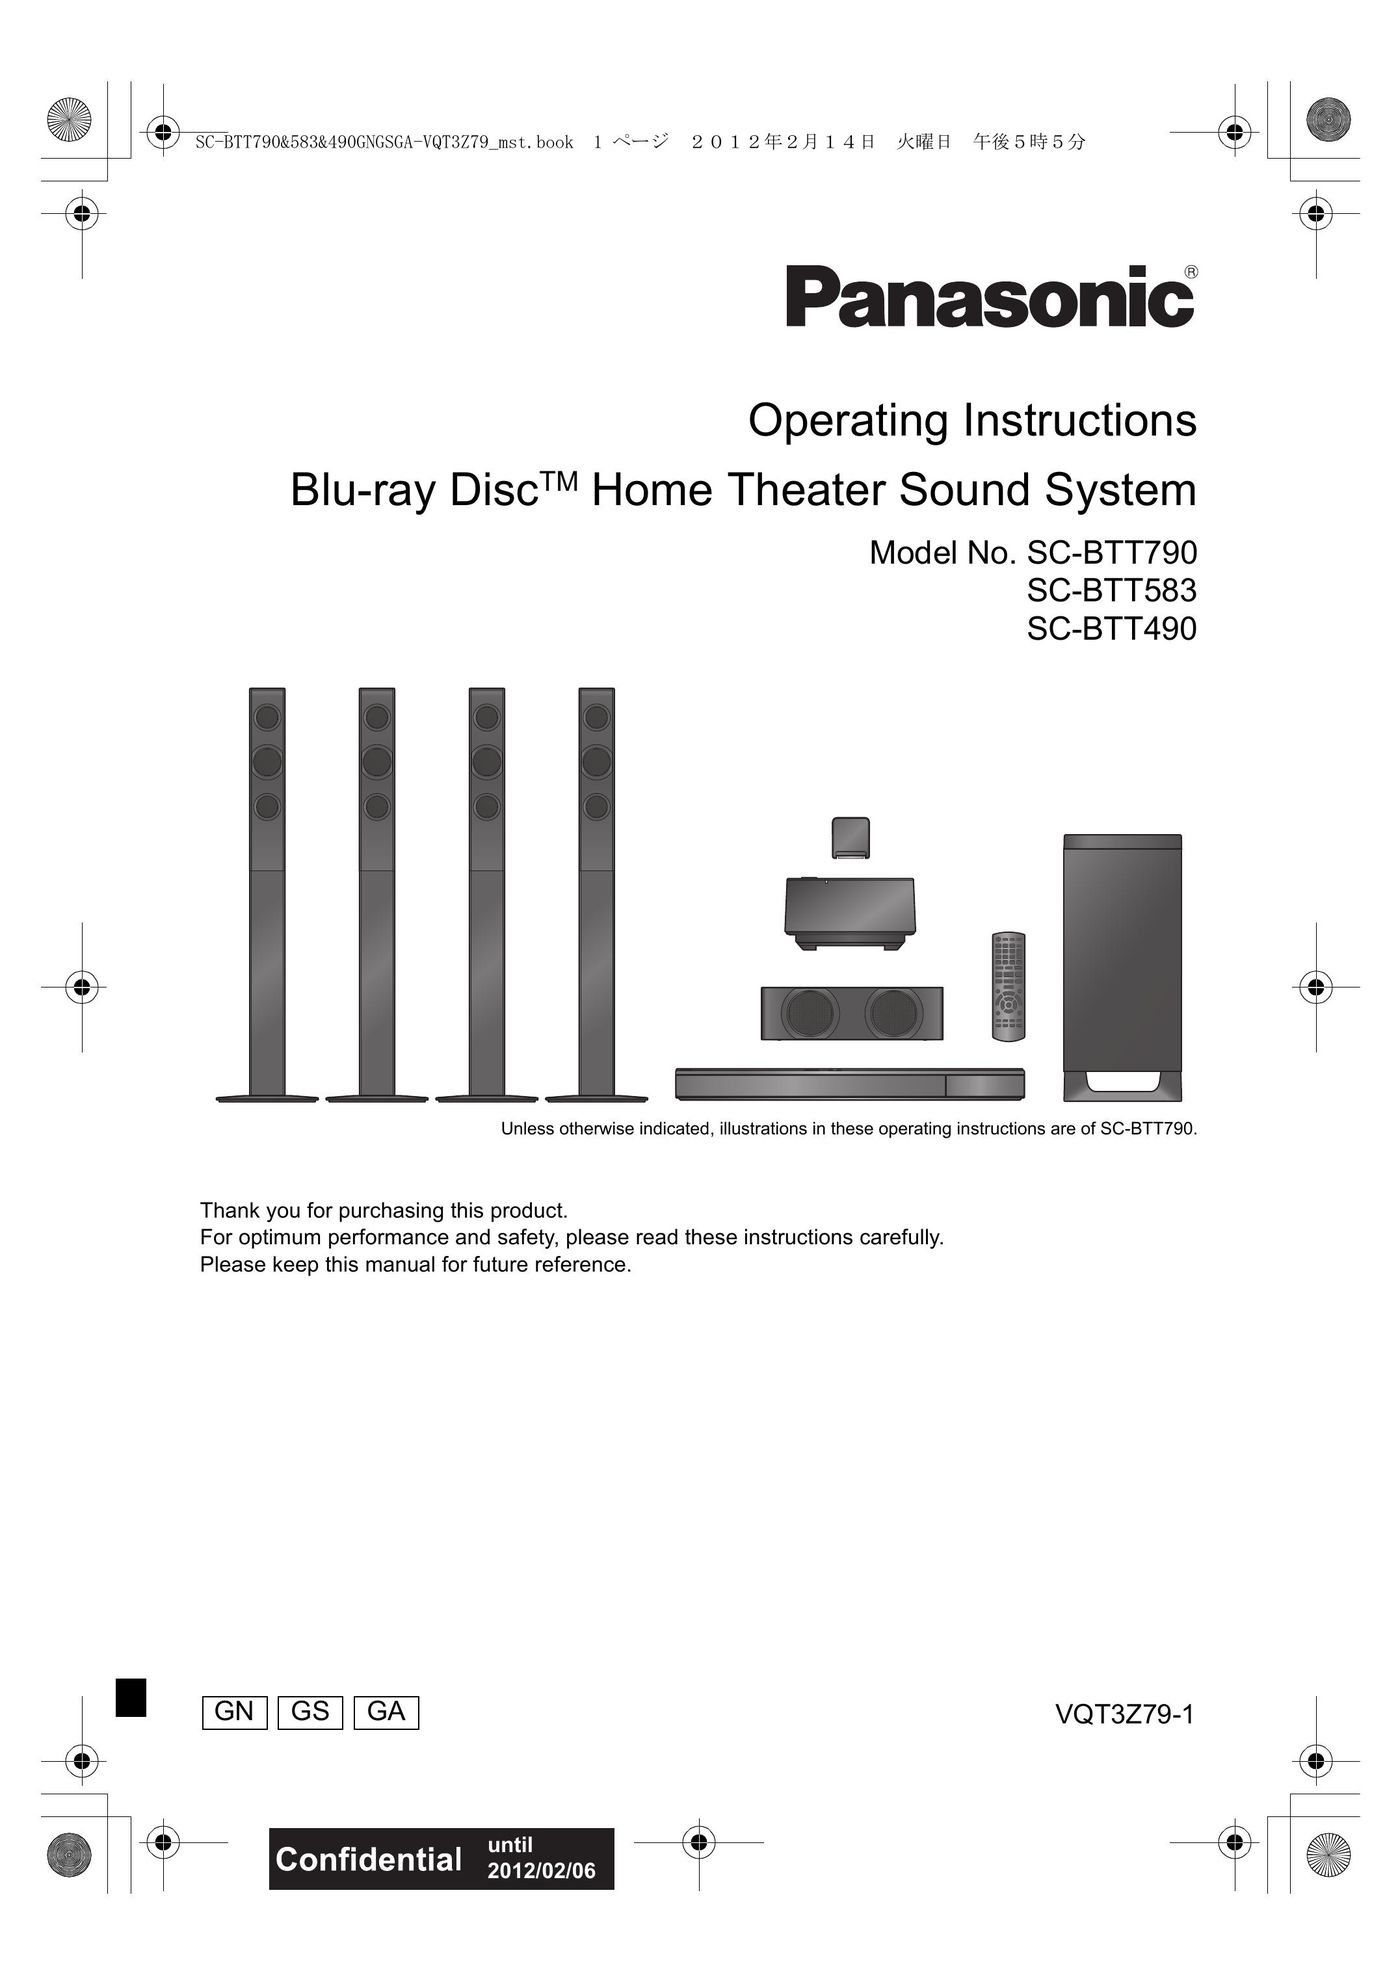 Panasonic SC-BTT583 Home Theater System User Manual